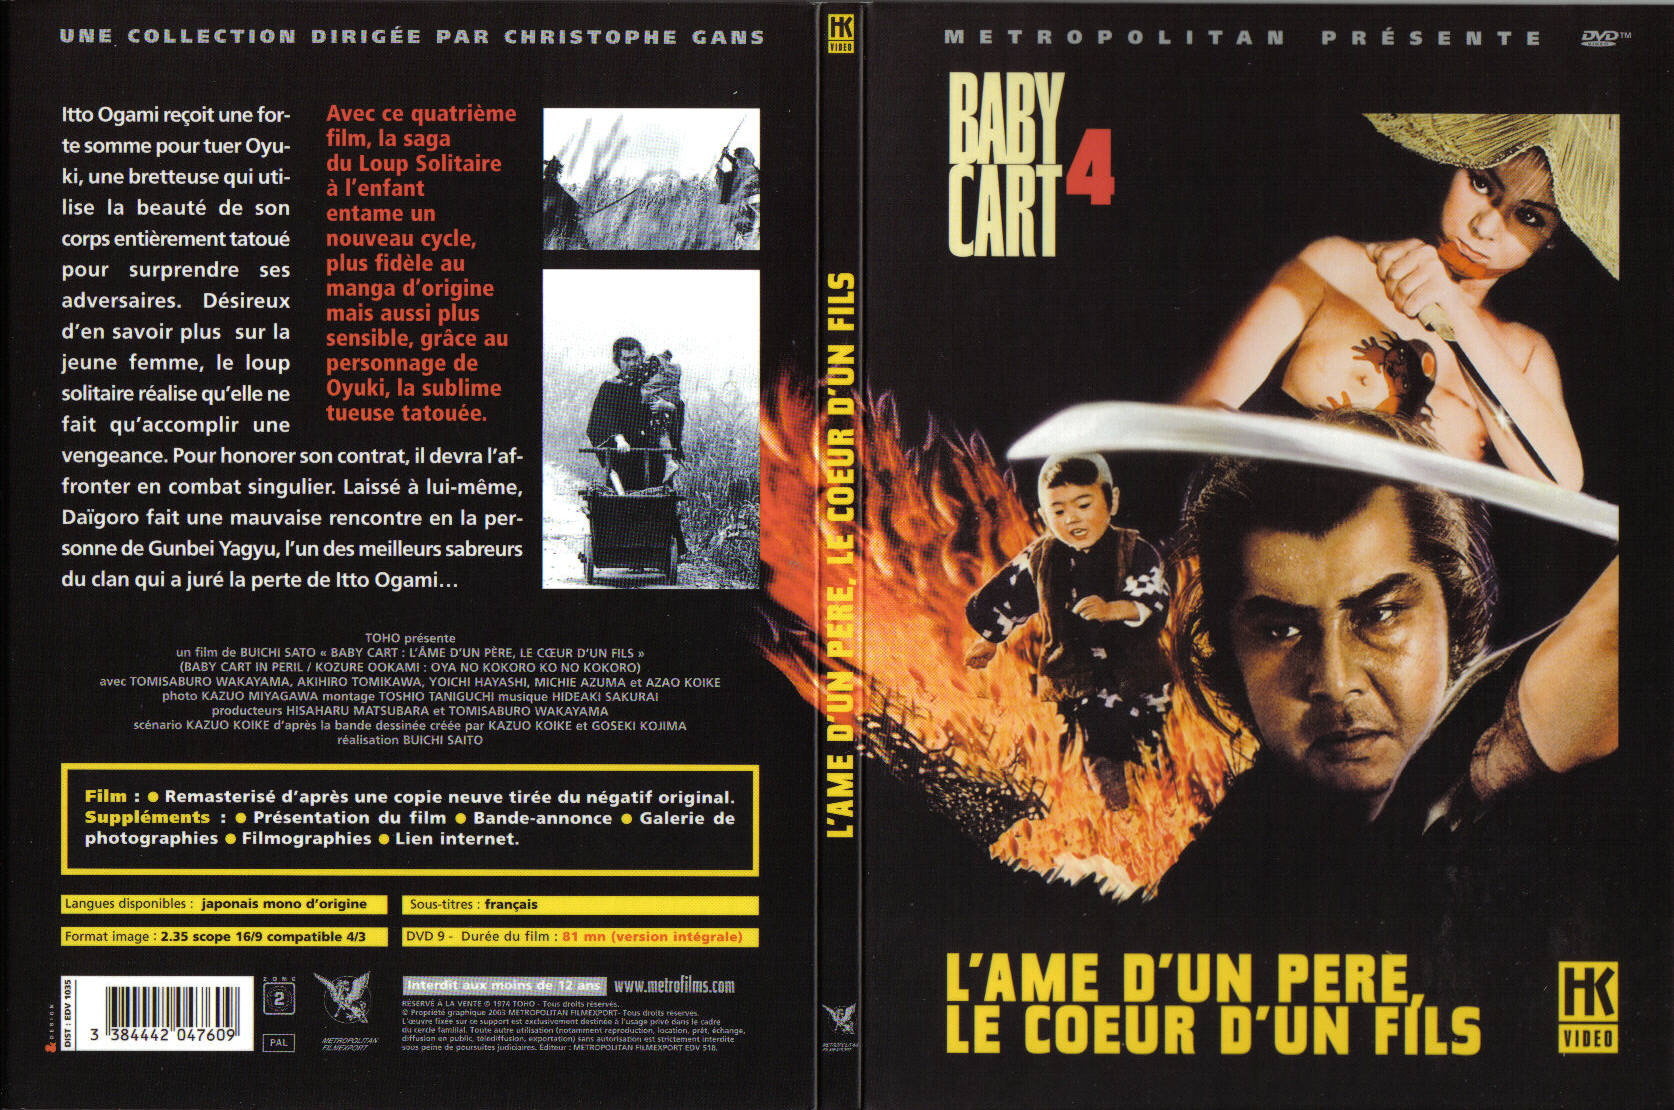 Jaquette DVD Baby cart 4 - l